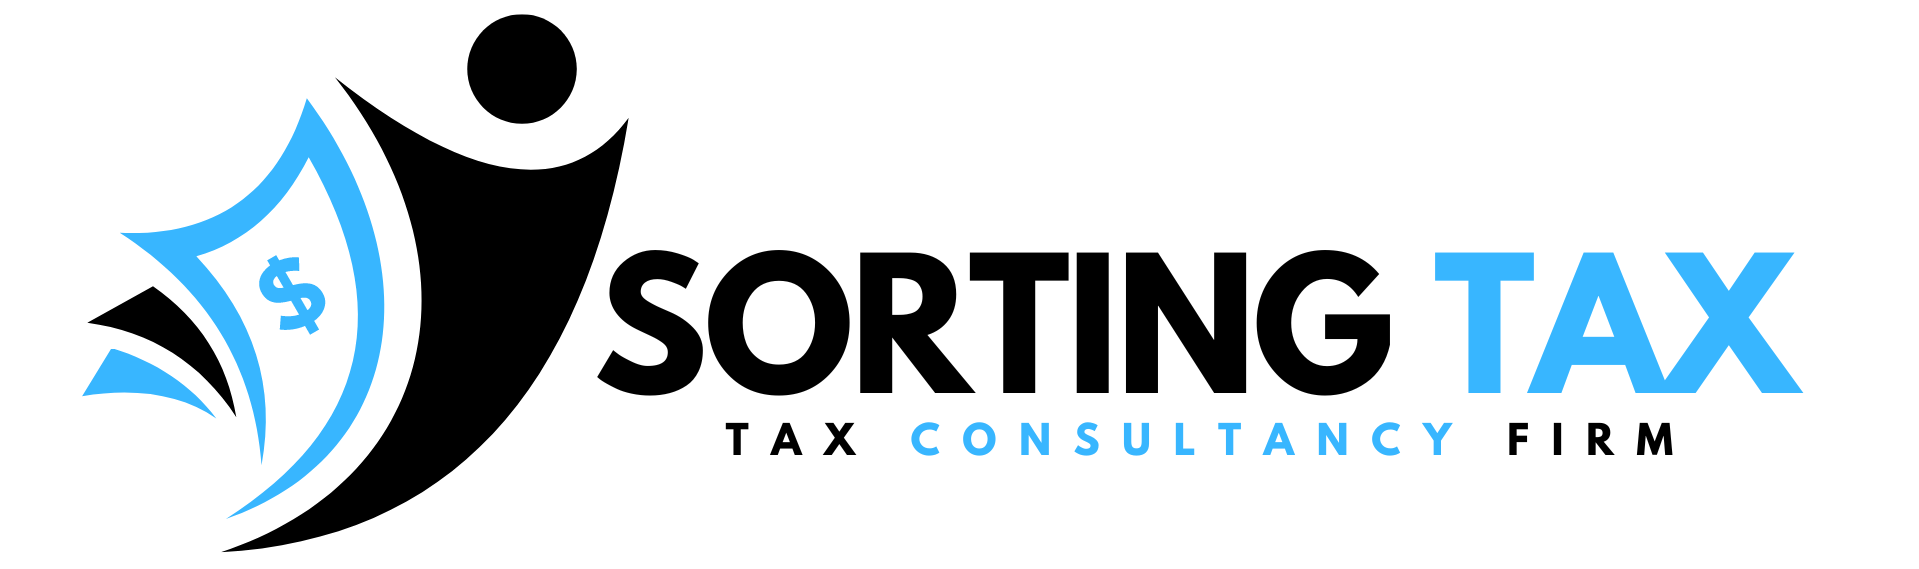 Sorting tax Logo